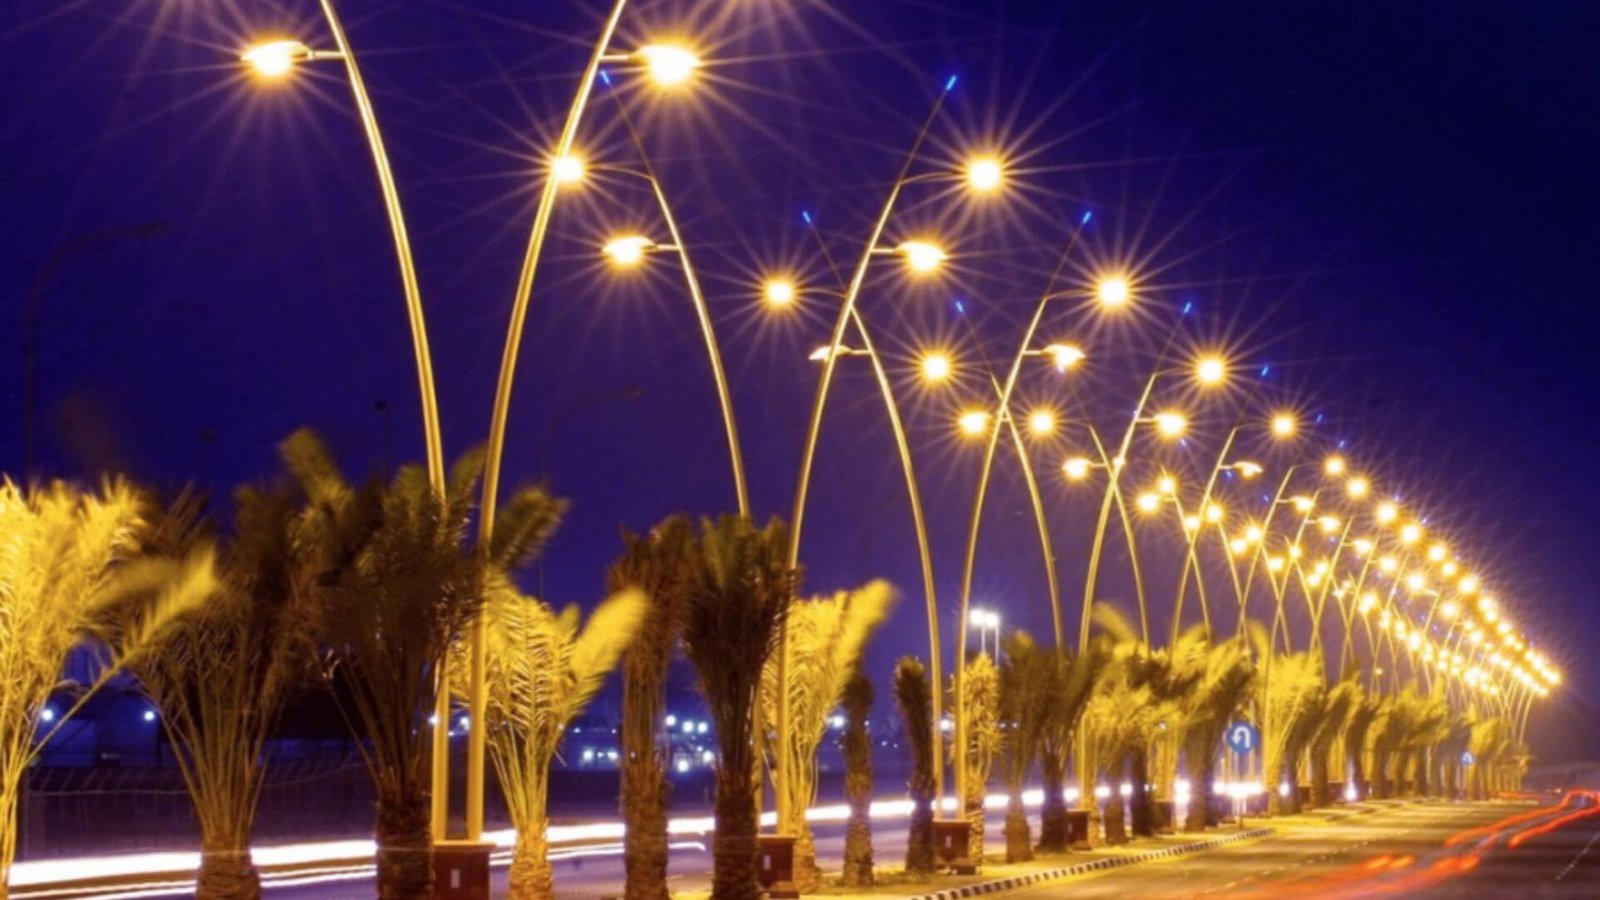 Benefits of LED street lighting